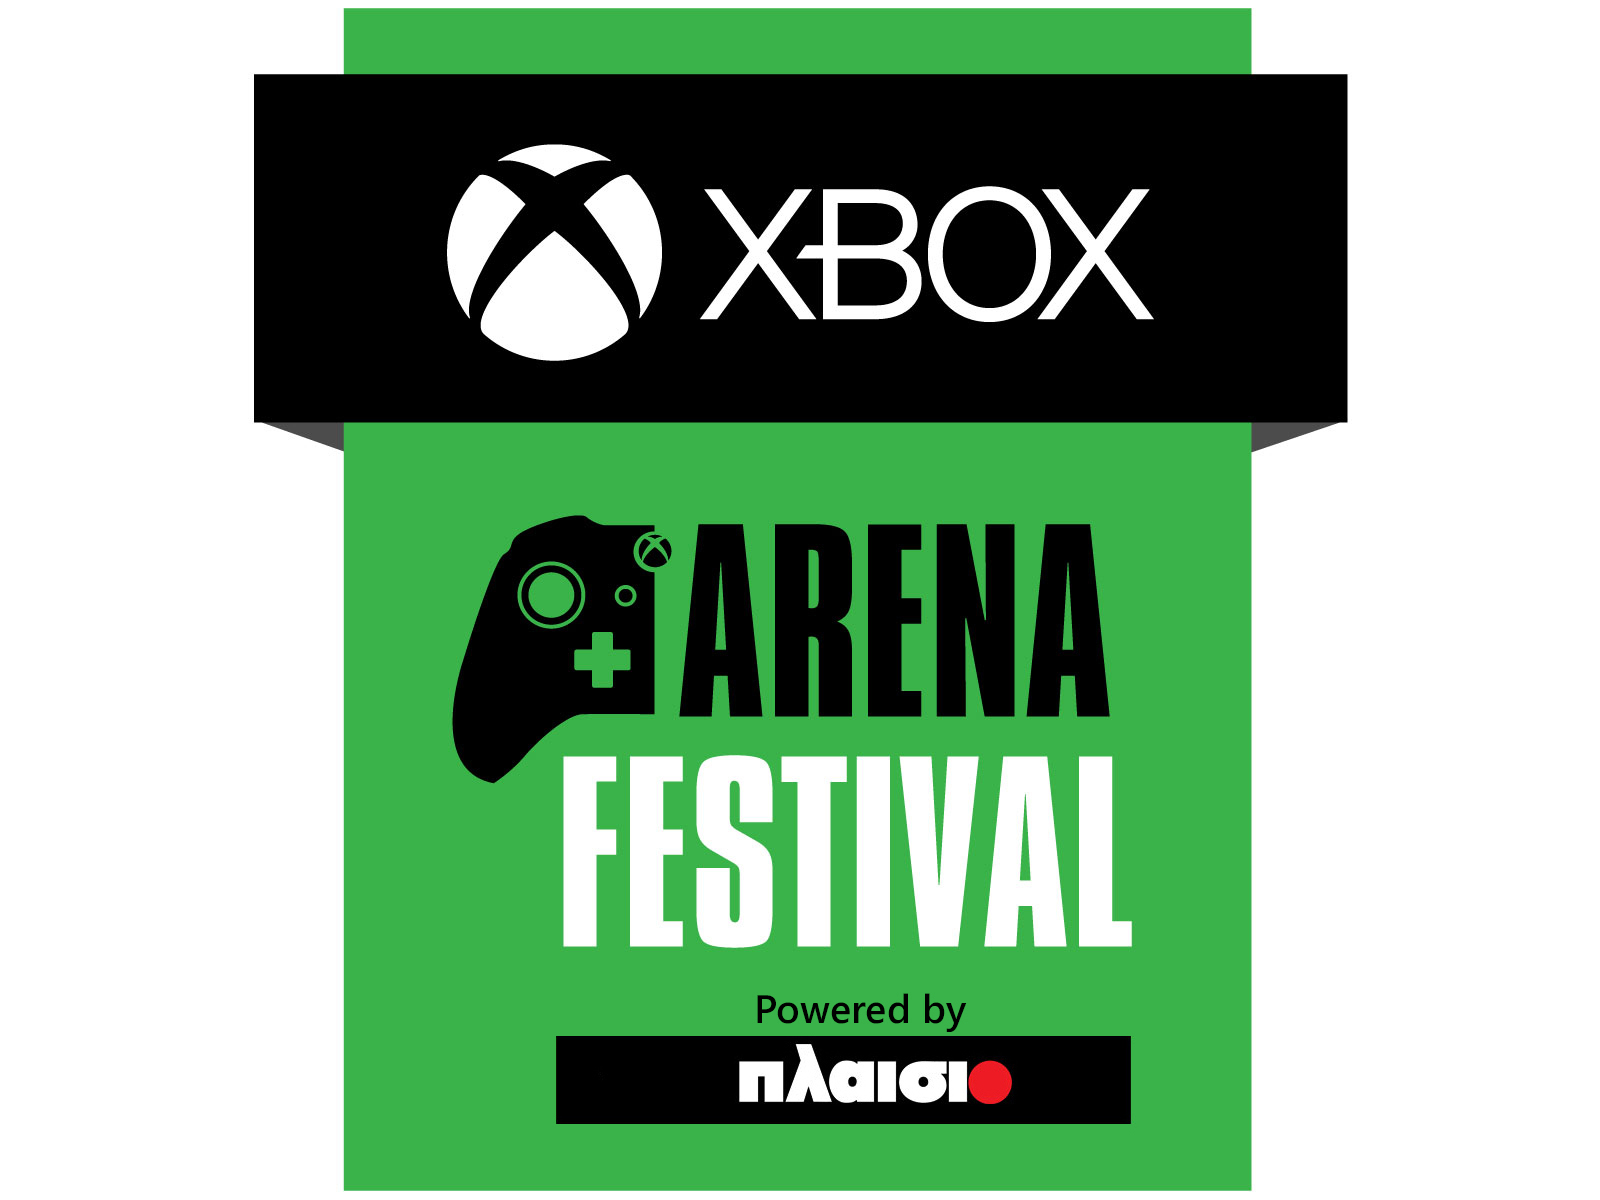 Xbox Arena Festival Logo